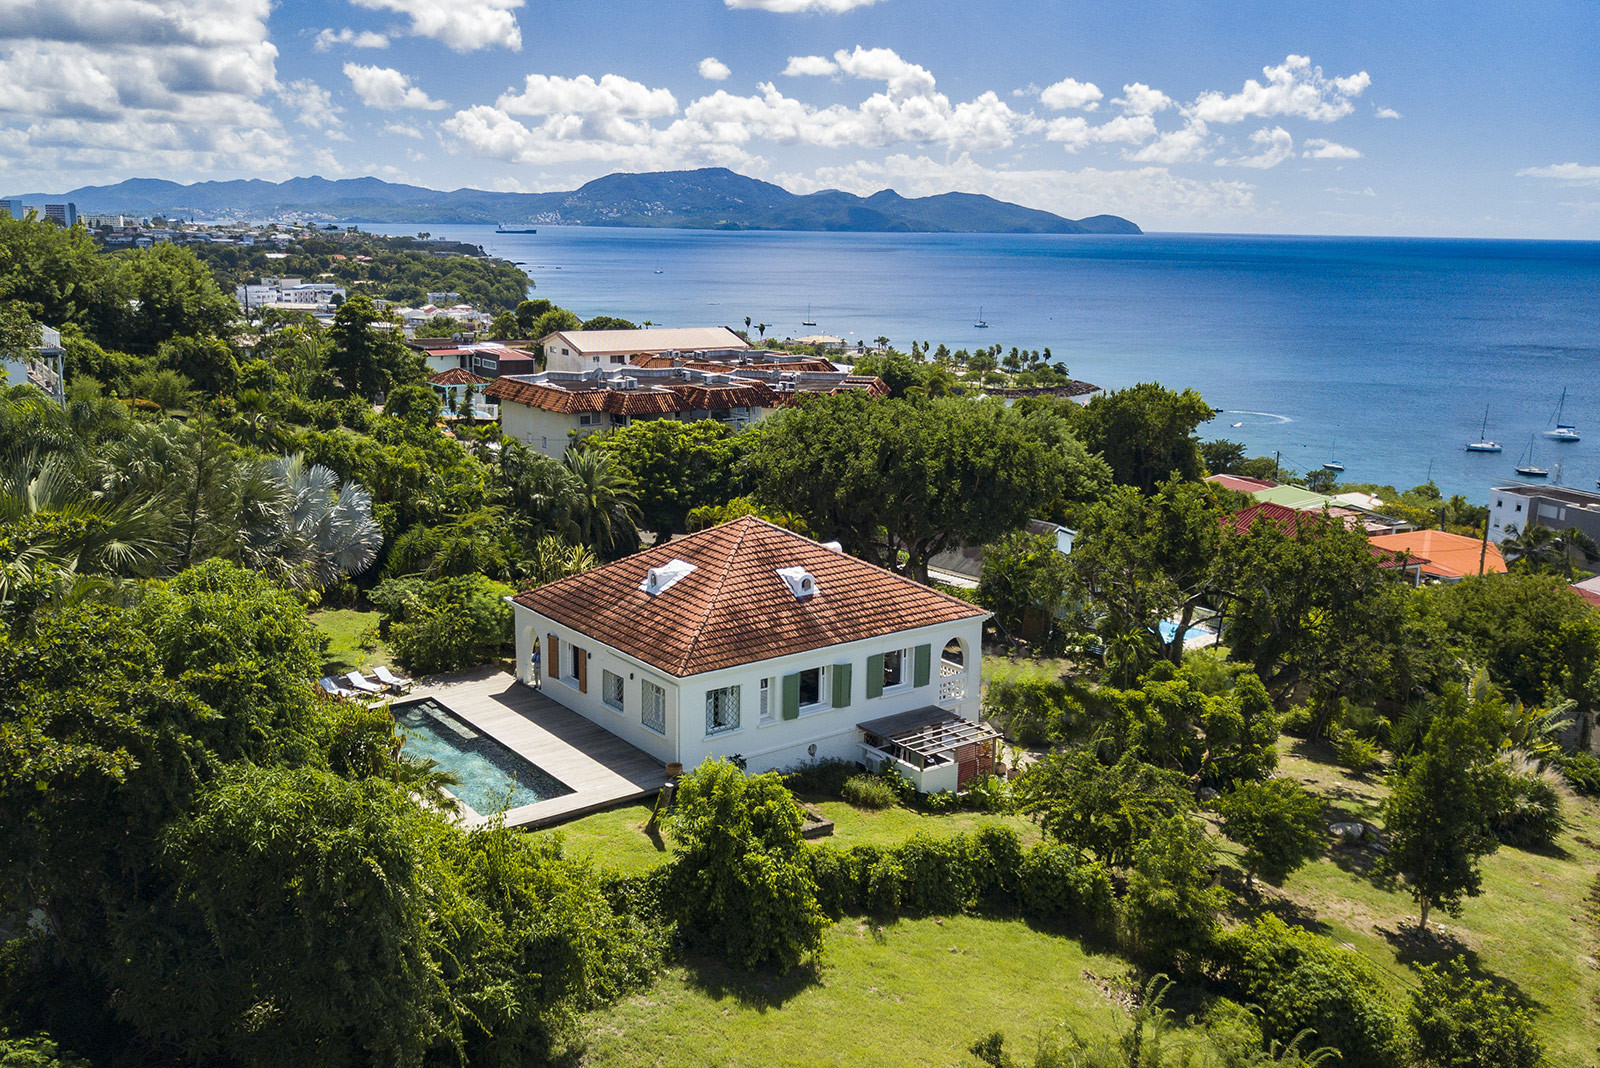 Petit TAMARIN location maison coloniale grande piscine et jardin vue mer Schoelcher Martinique - 